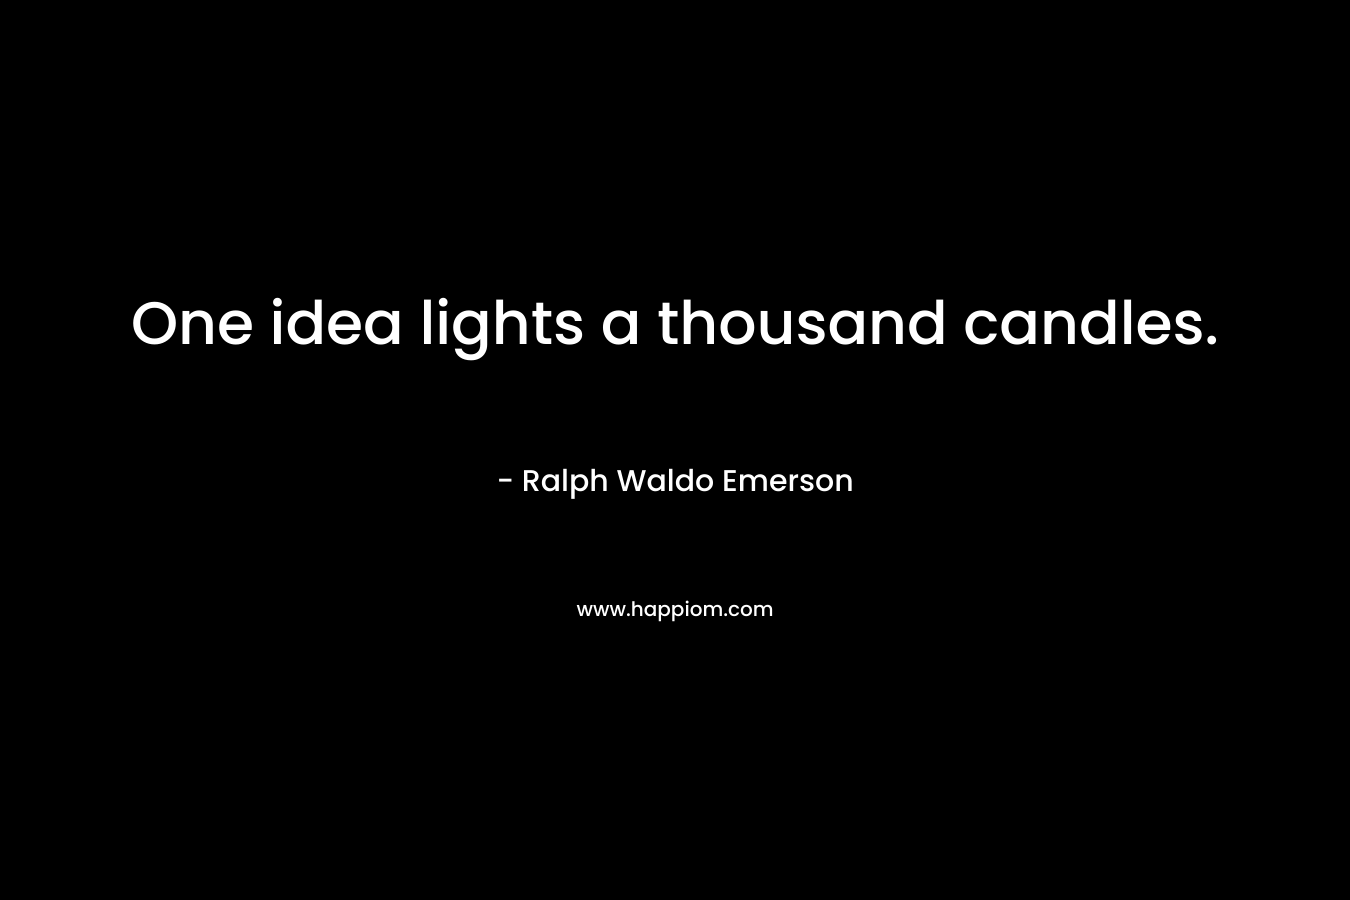 One idea lights a thousand candles.